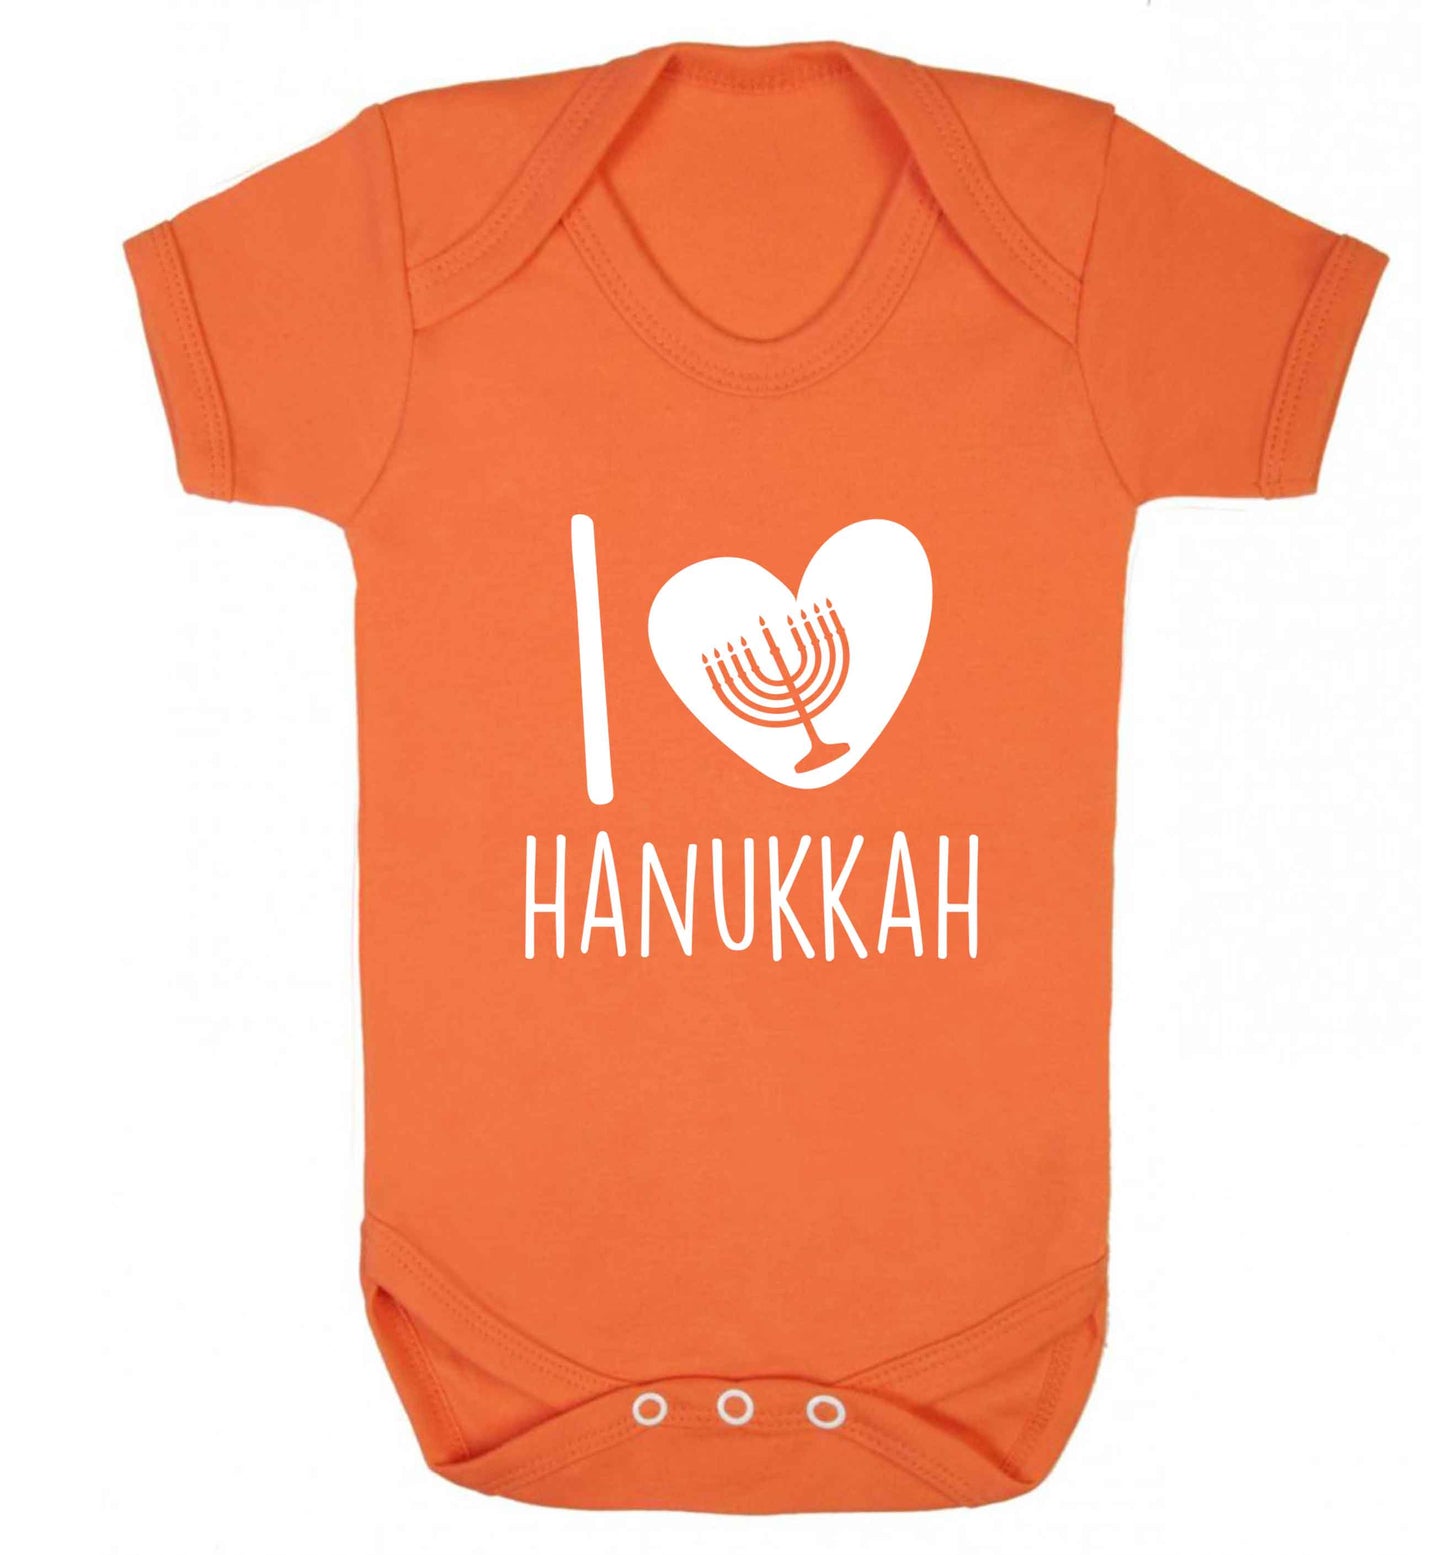 I love hanukkah baby vest orange 18-24 months